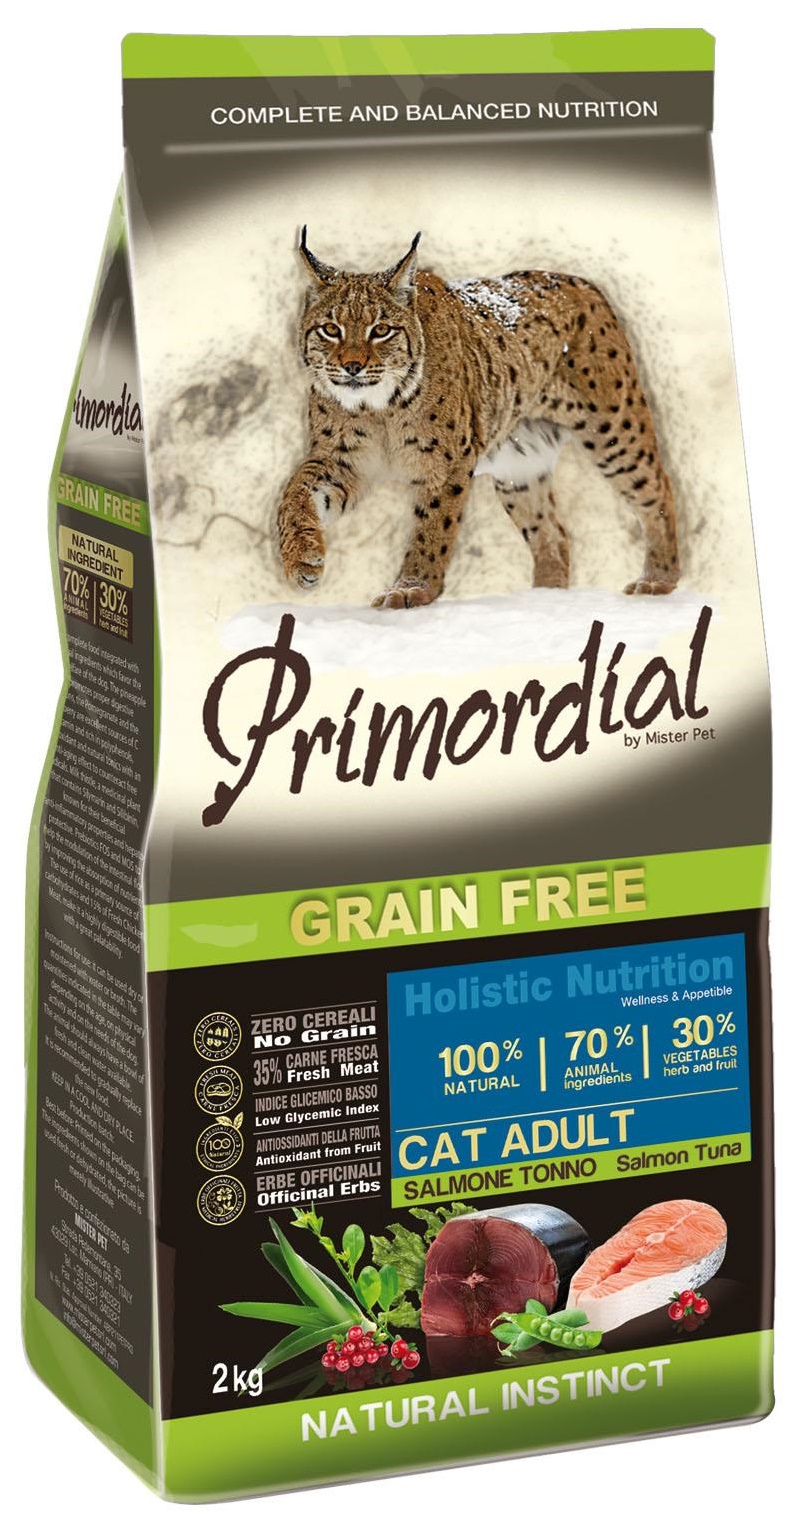 Primordial Grain Free Cat Adult Salmon and Tuna 2 kg